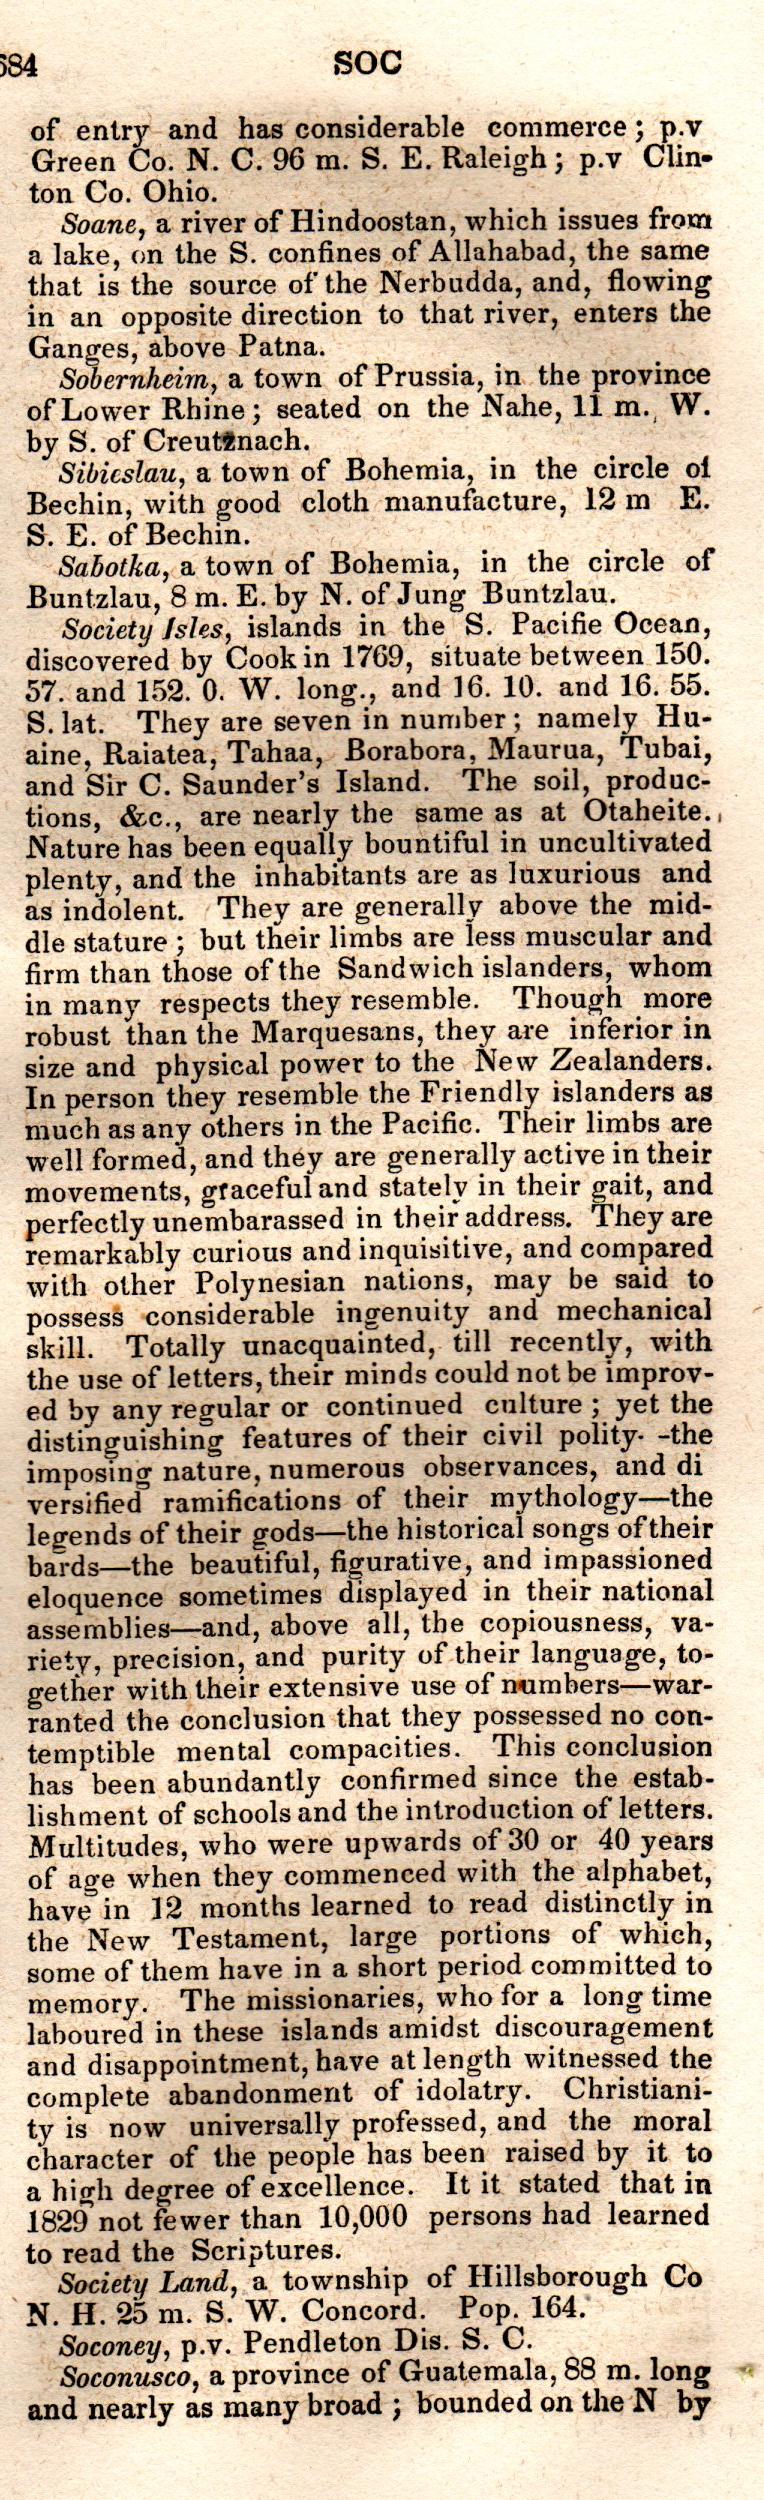 Brookes’ Universal Gazetteer (1850), Page 684 Right Column